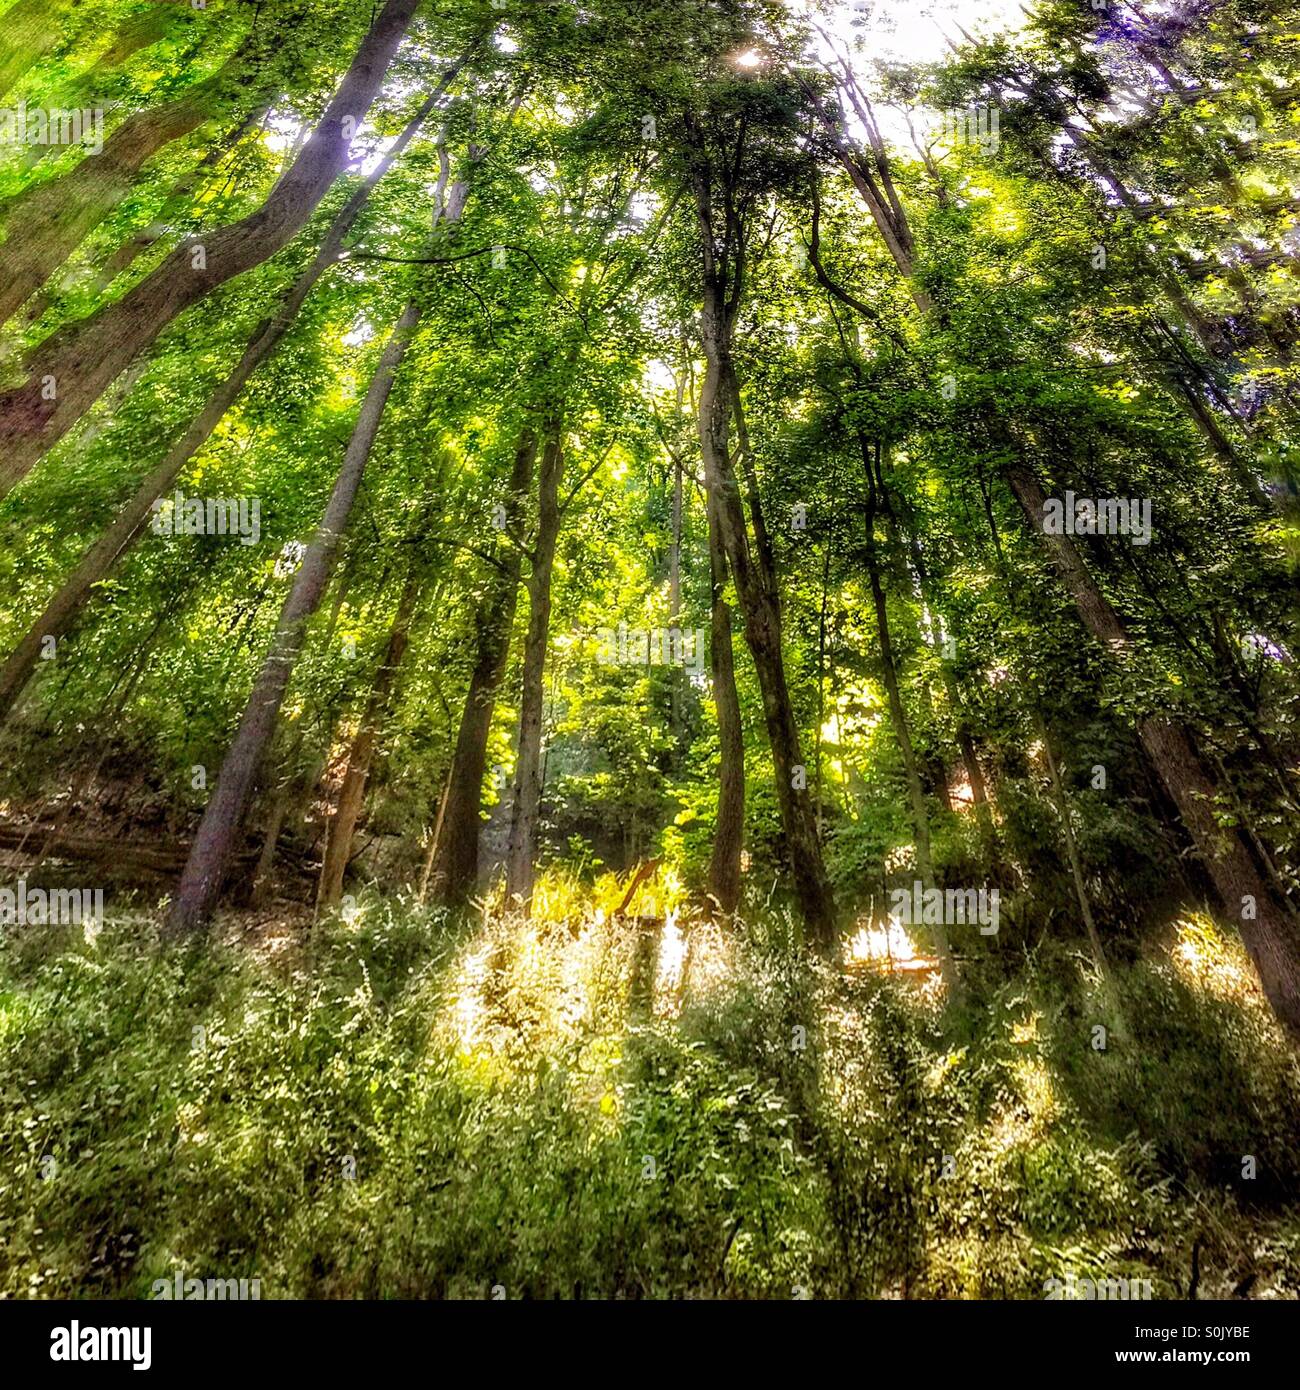 Tall trees stretch upward into the sun. Stock Photo